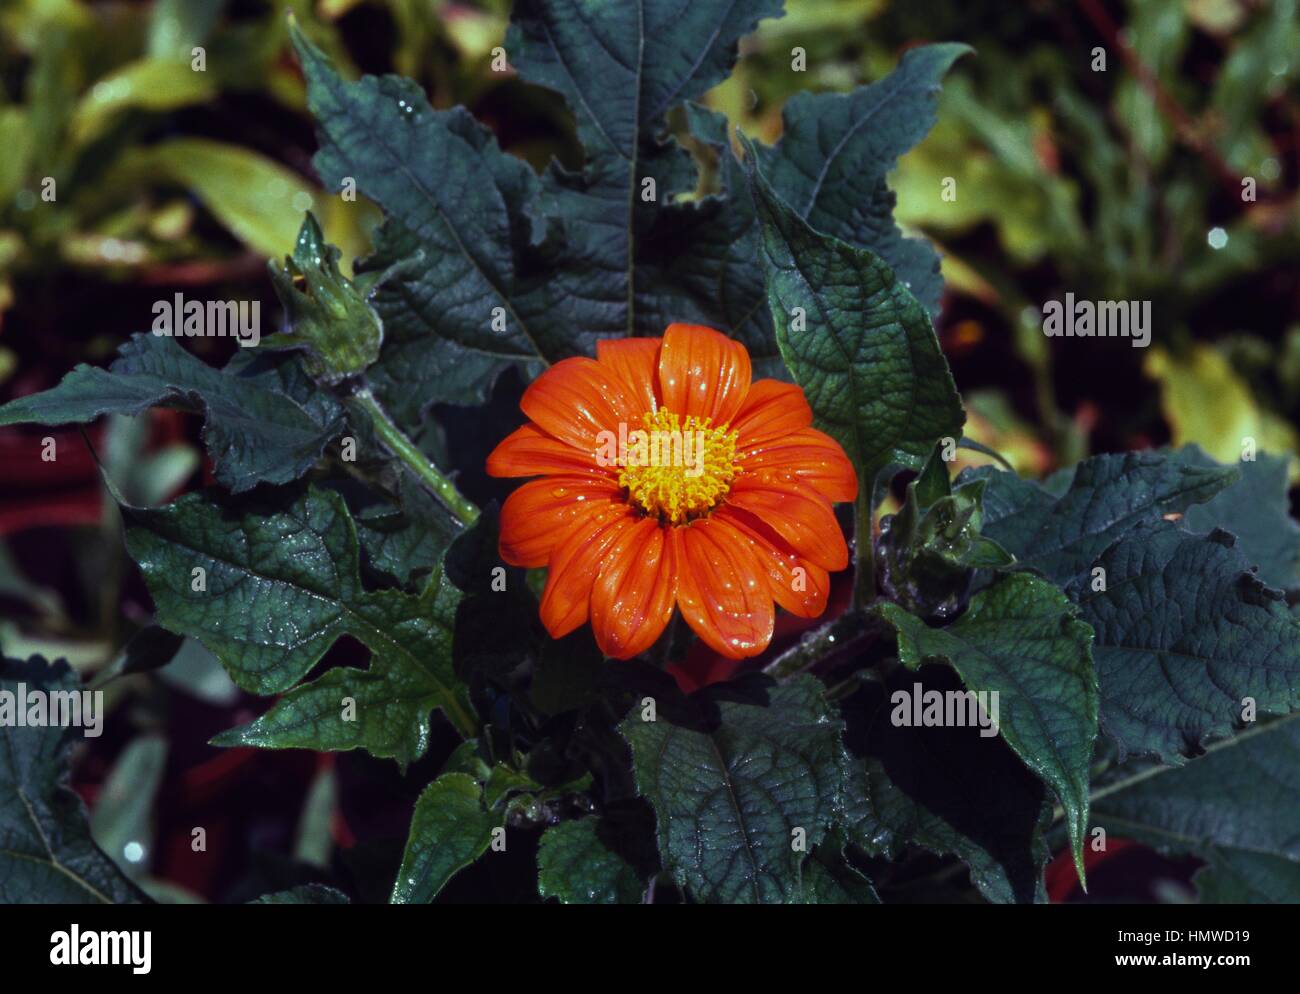 Mexican sunflower (Tithonia speciosa or Tithonia rotundifoglia), Asteraceae. Stock Photo